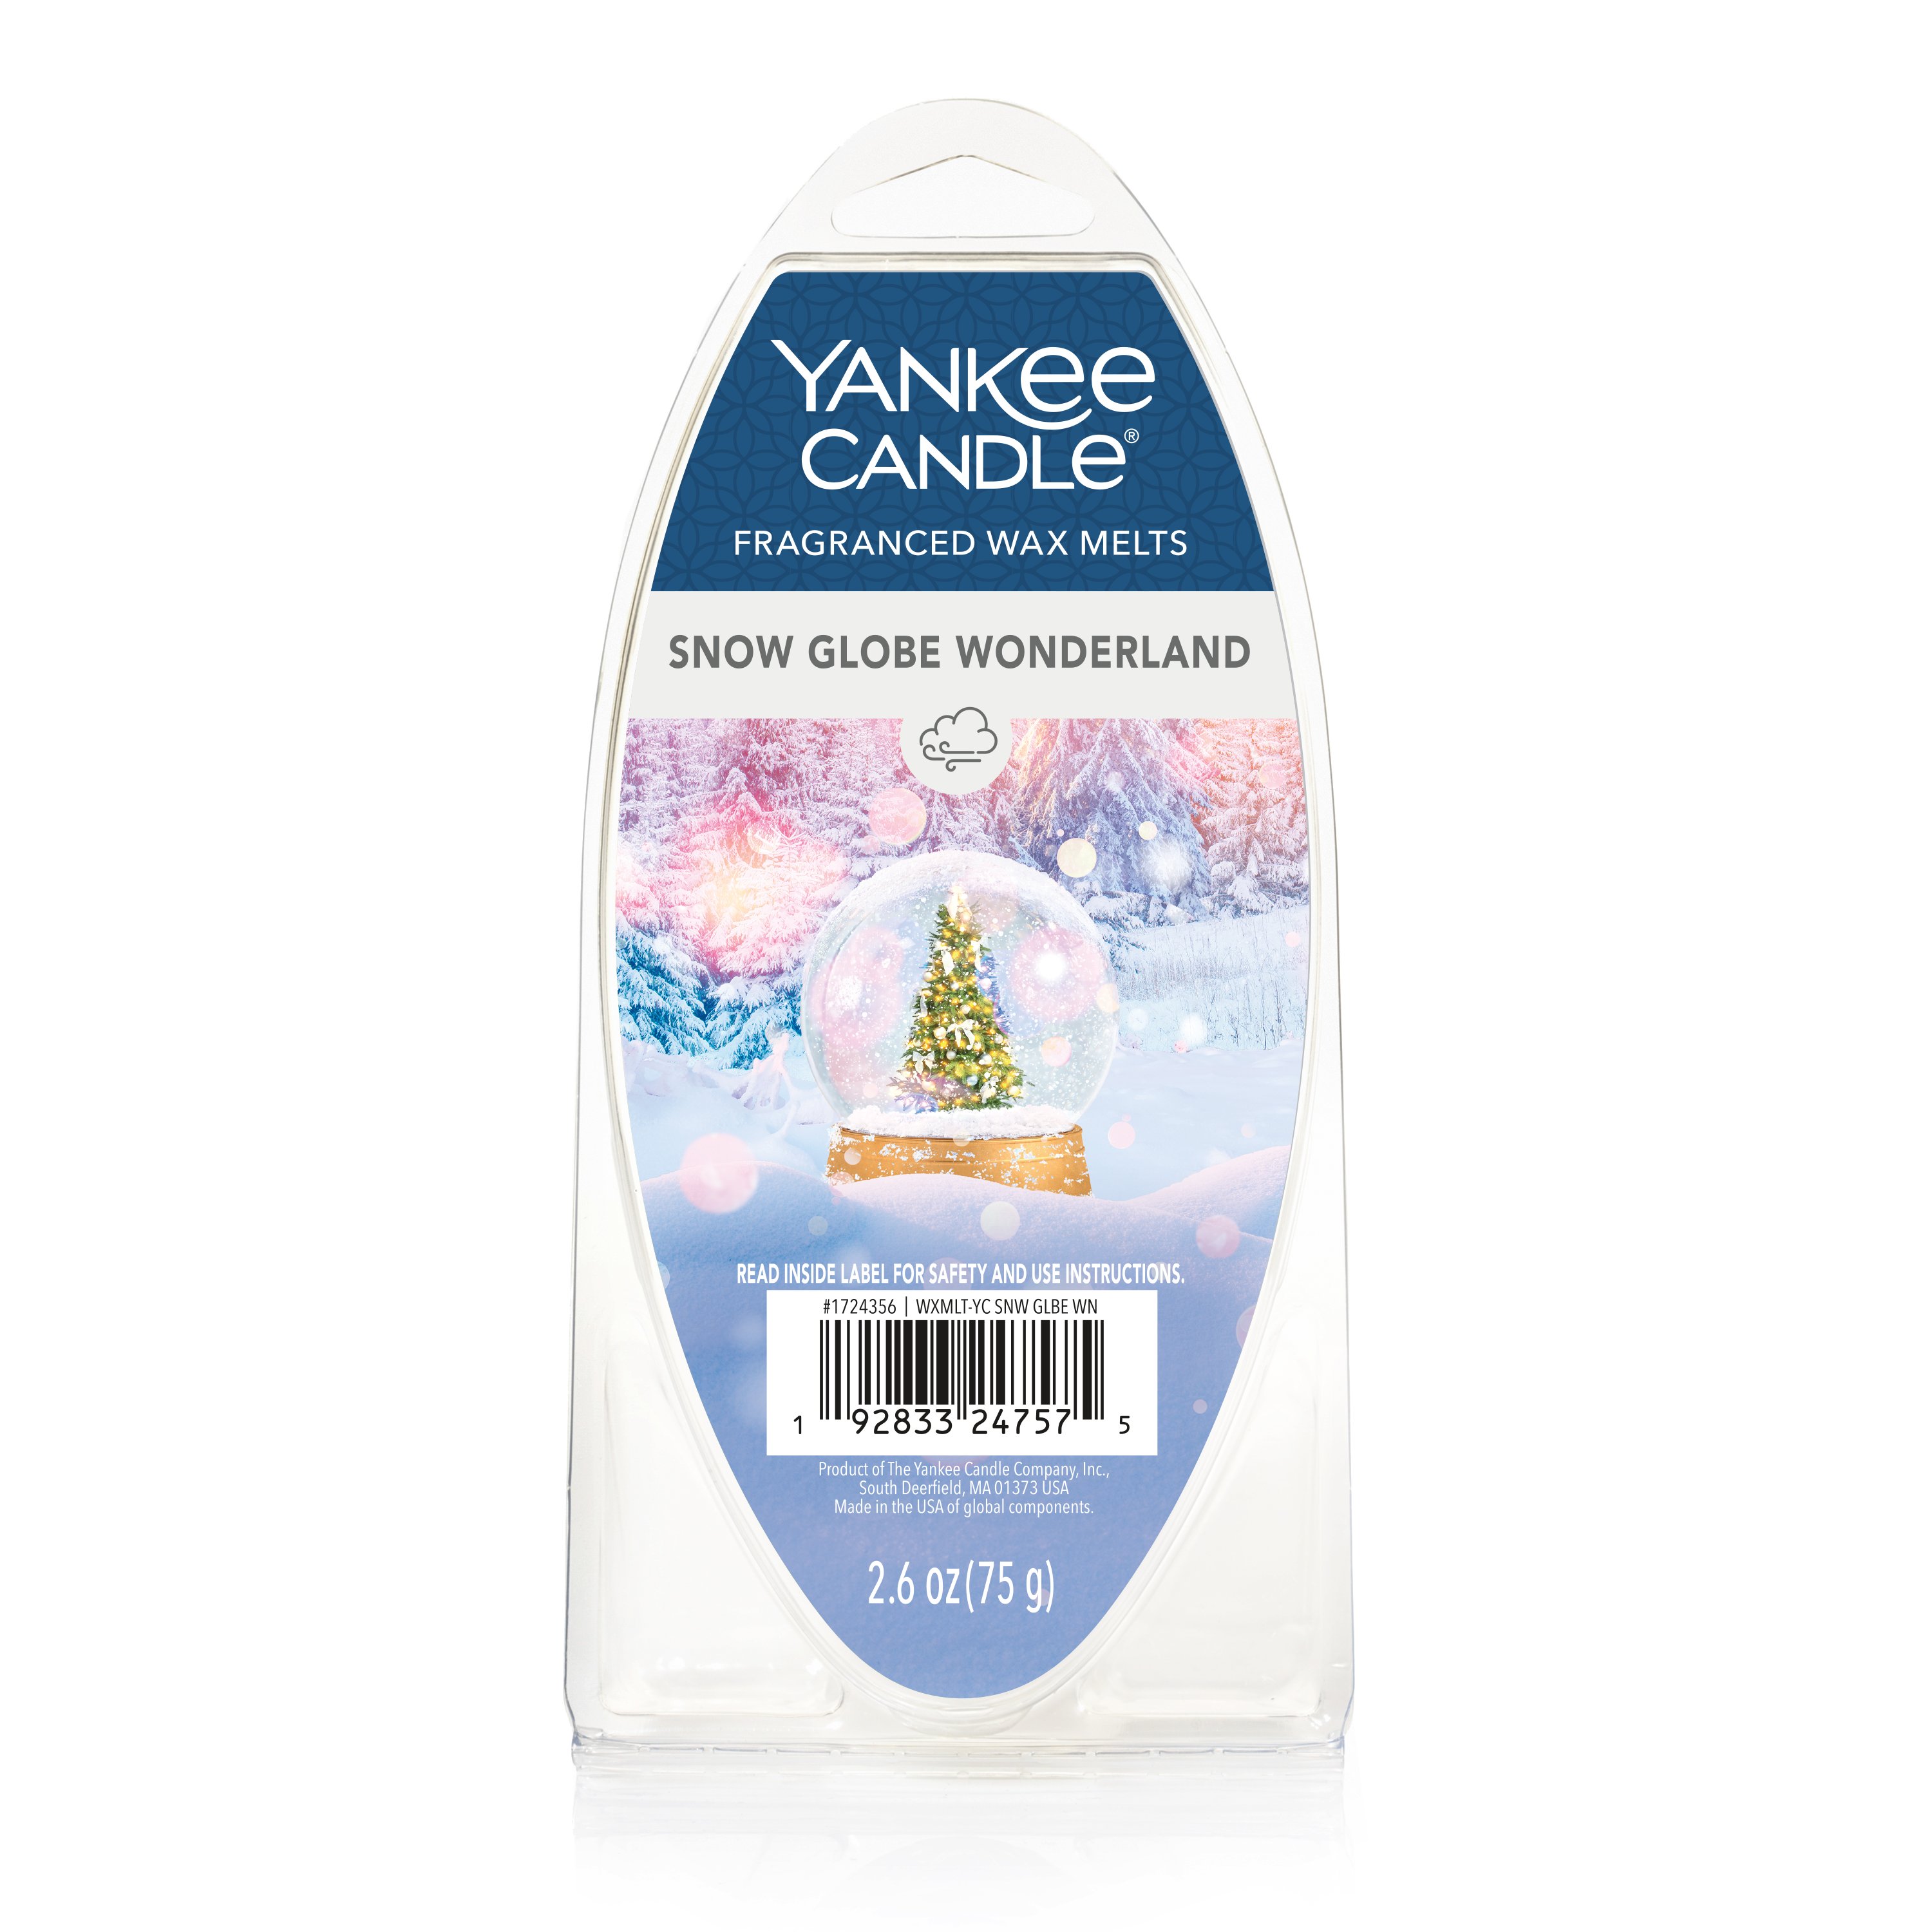 Yankee Candle Wax Melt Snow Globe Wonderland (2.6 oz)